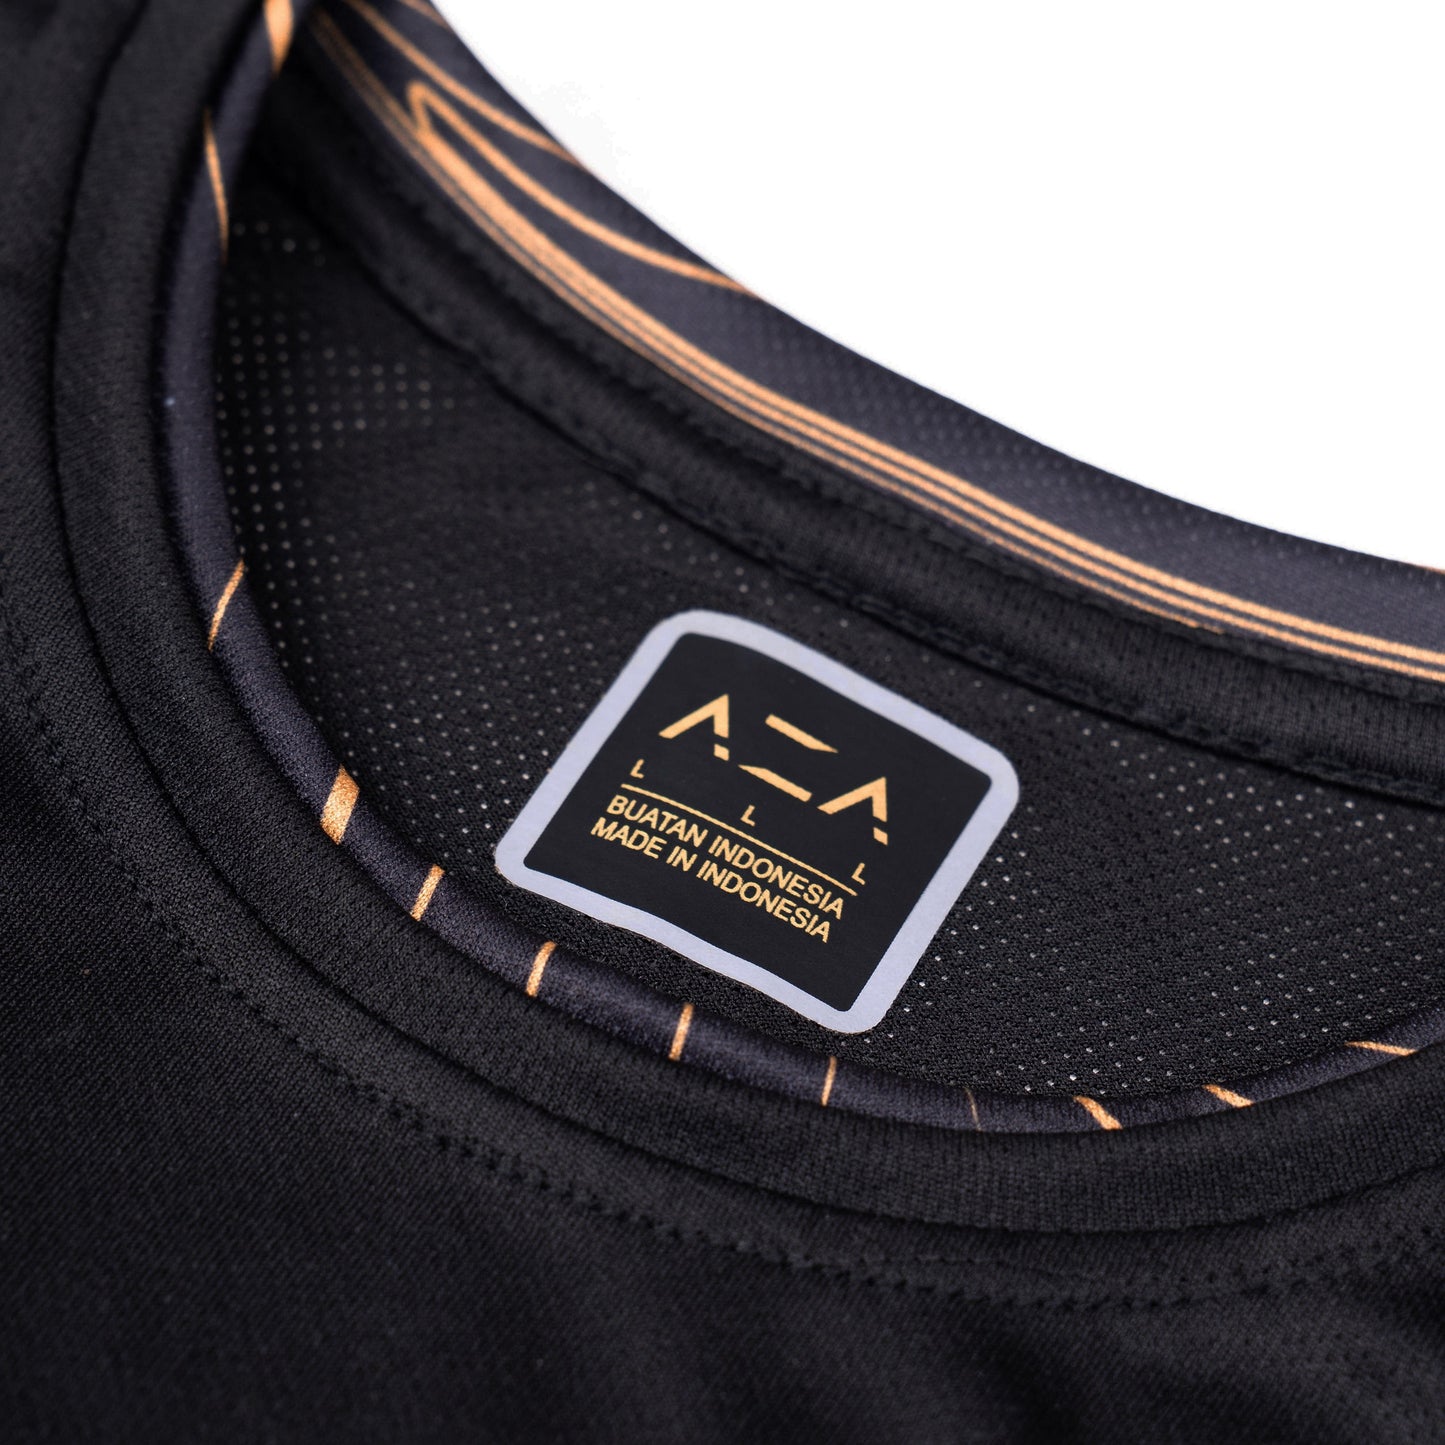 AZA Shirt Performance Dark Series - Black / Gold